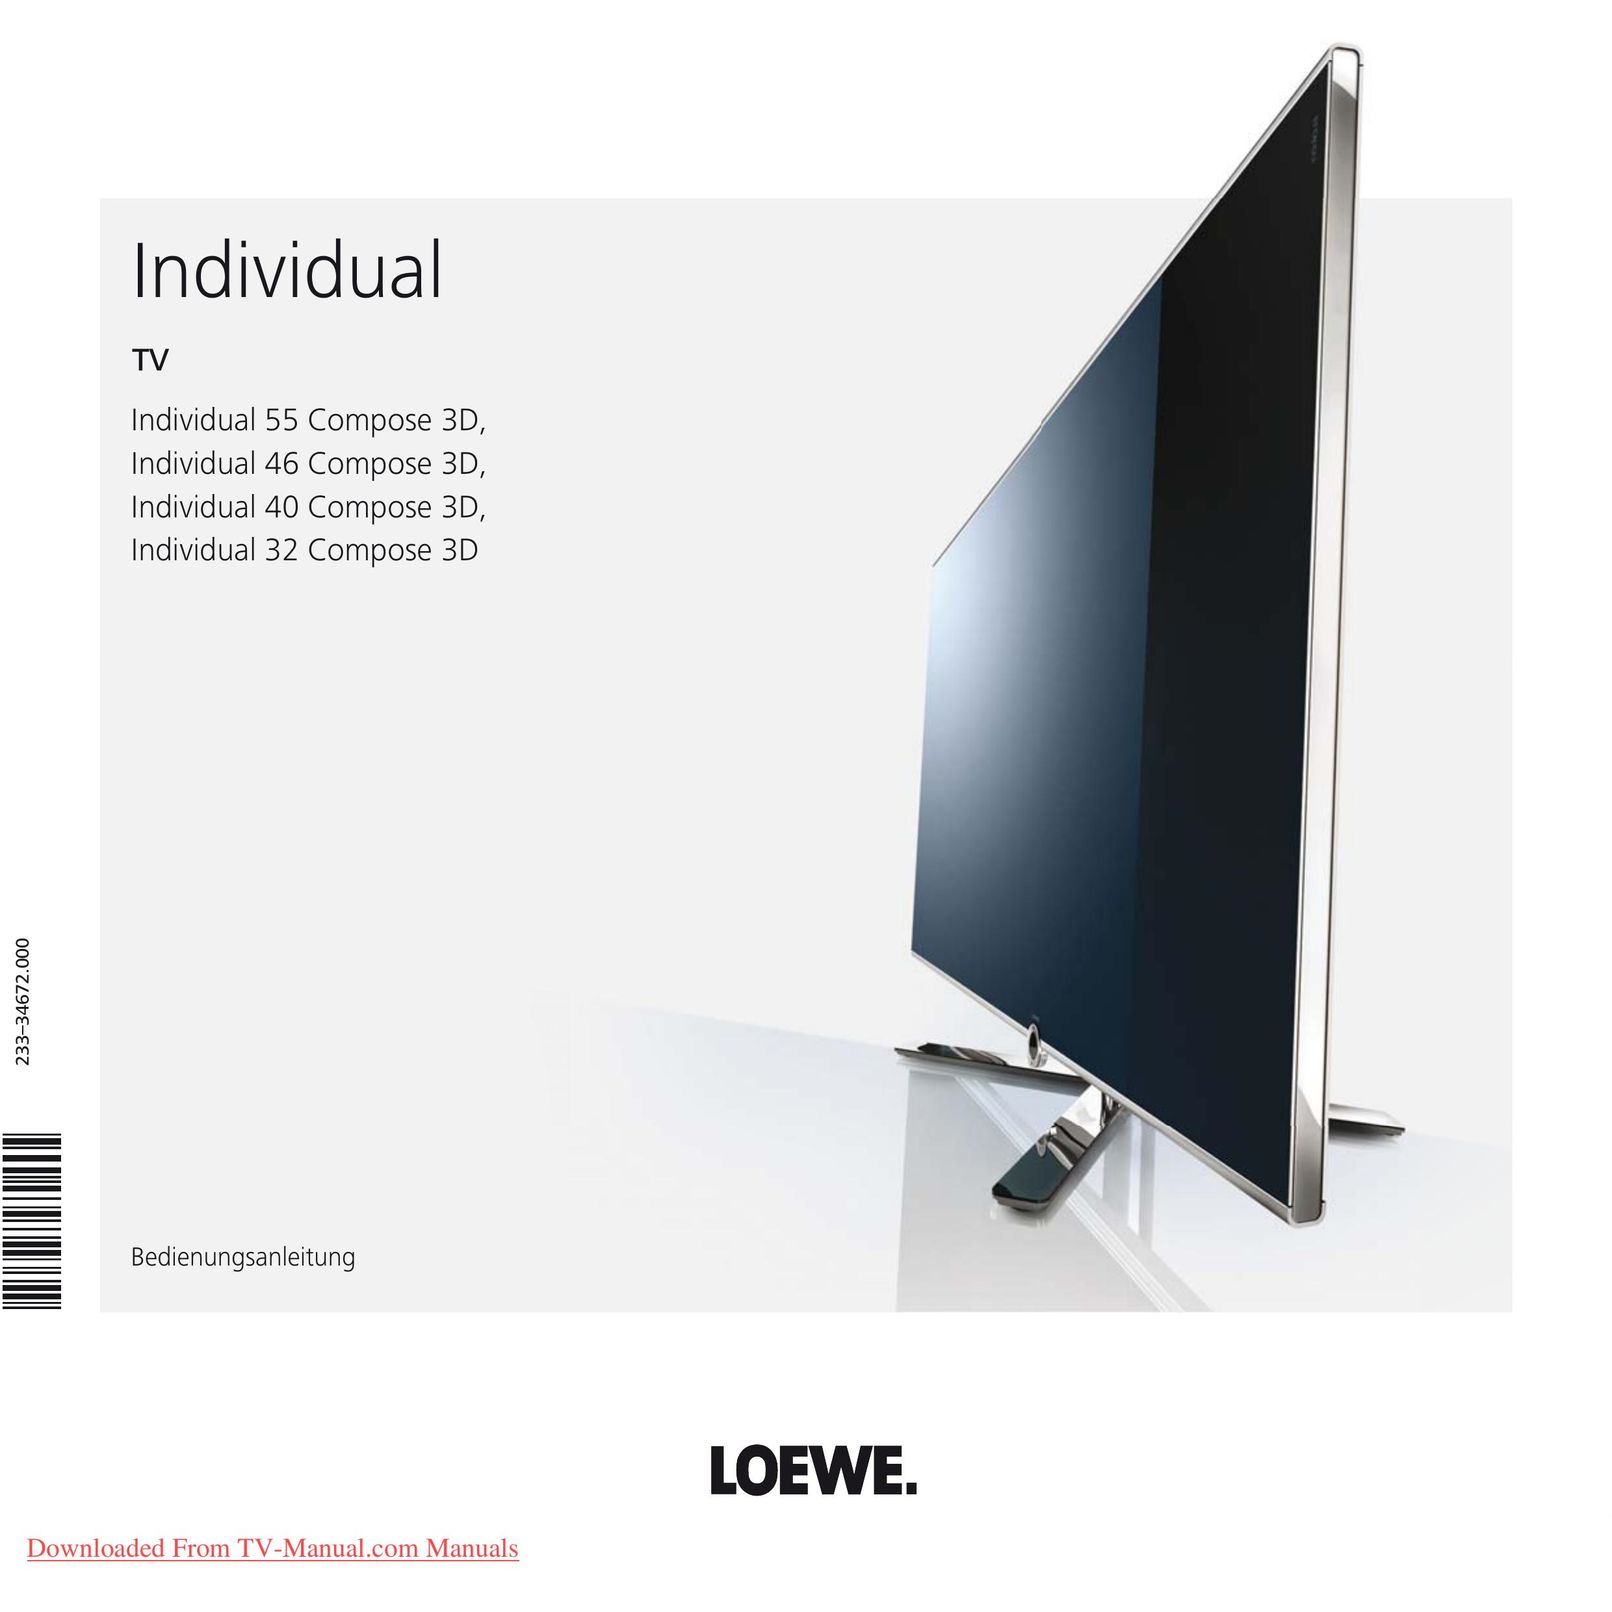 Loewe Individual 40 Compose 3D TV Antenna User Manual